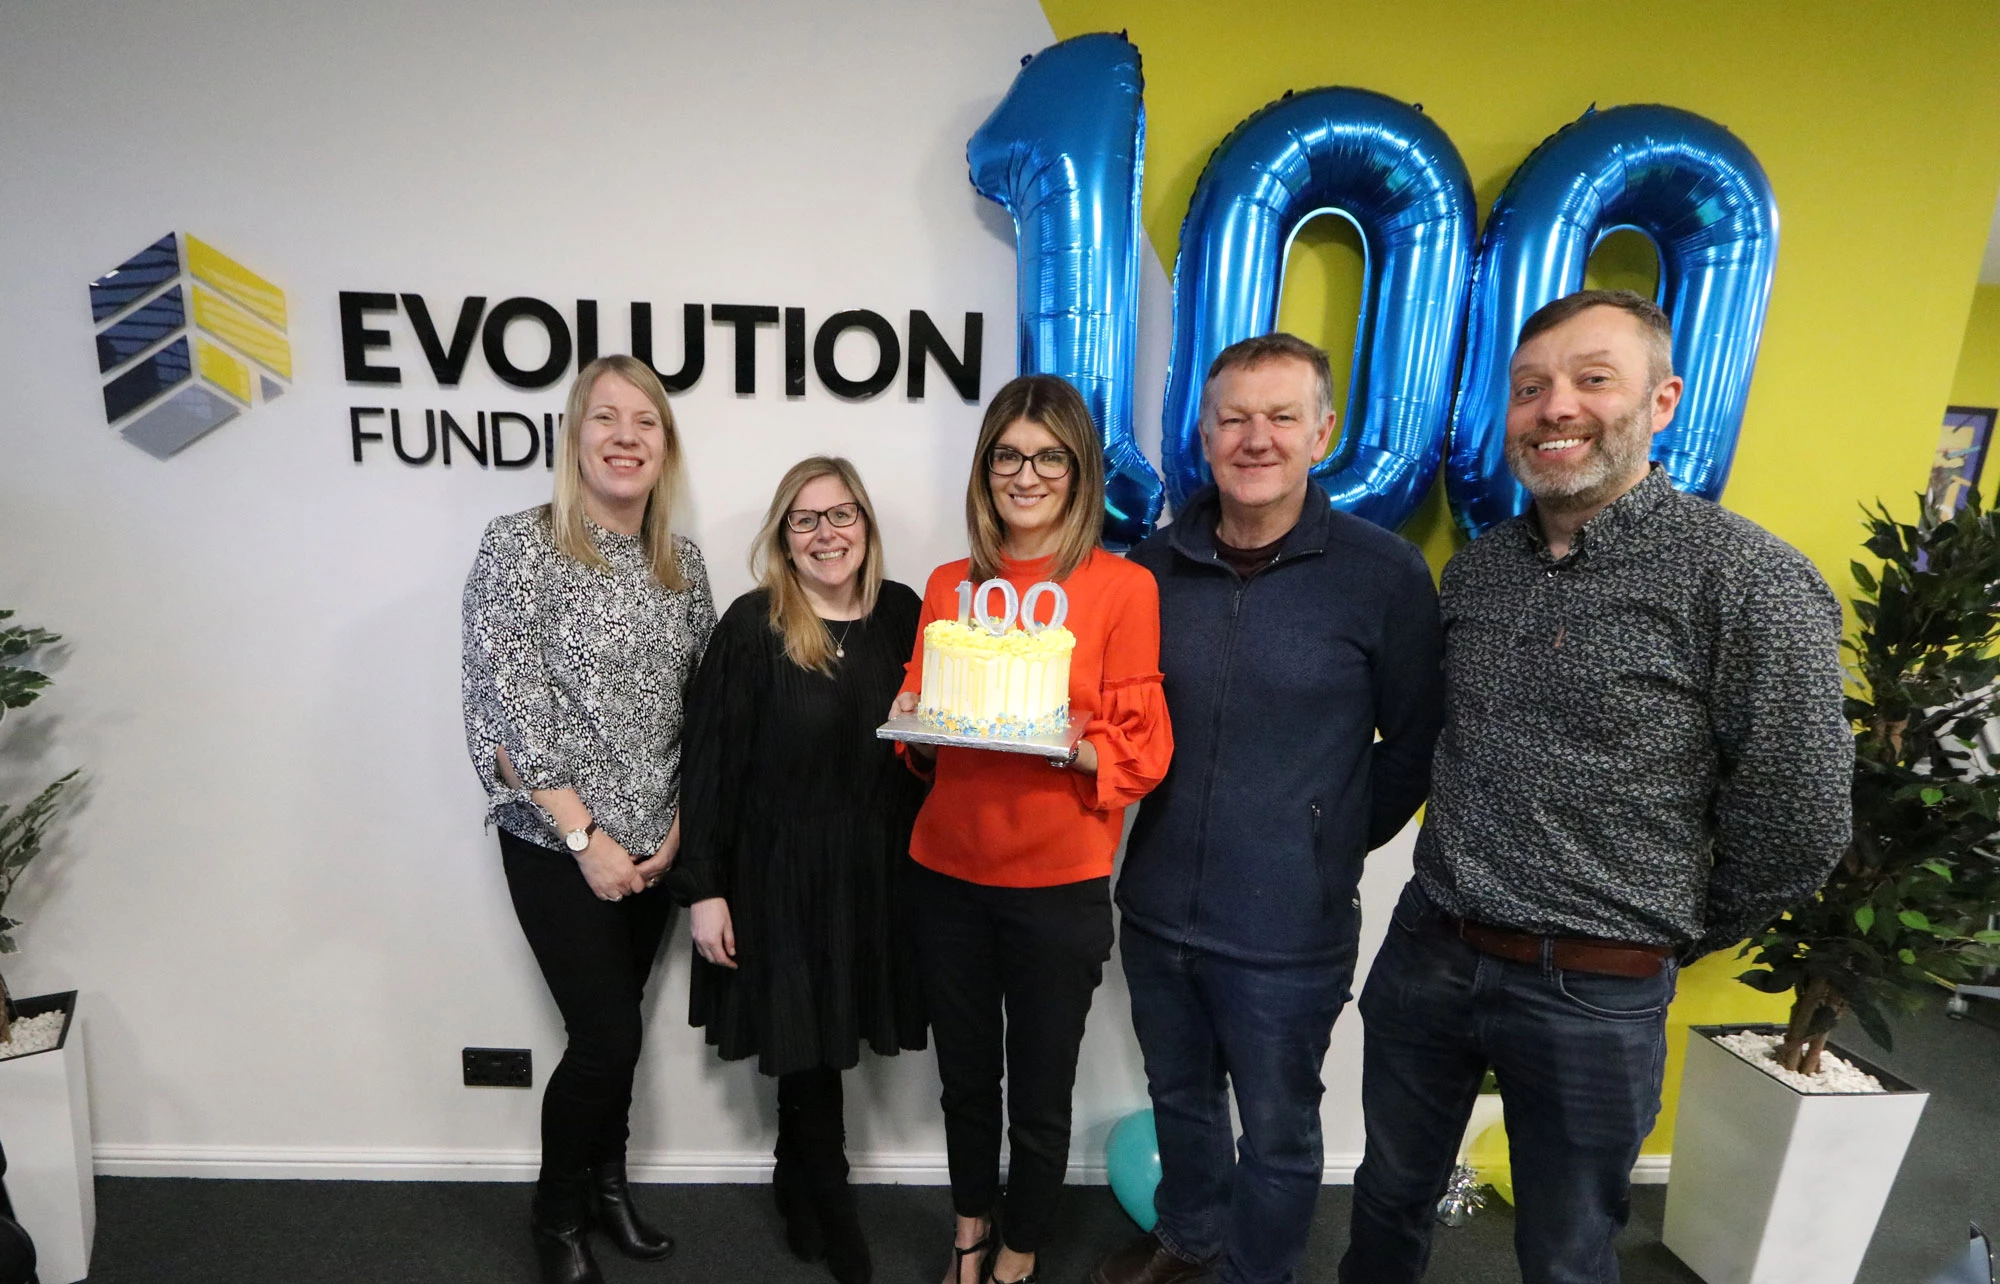 Evolution Funding staff celebrating £100 million advances milestone